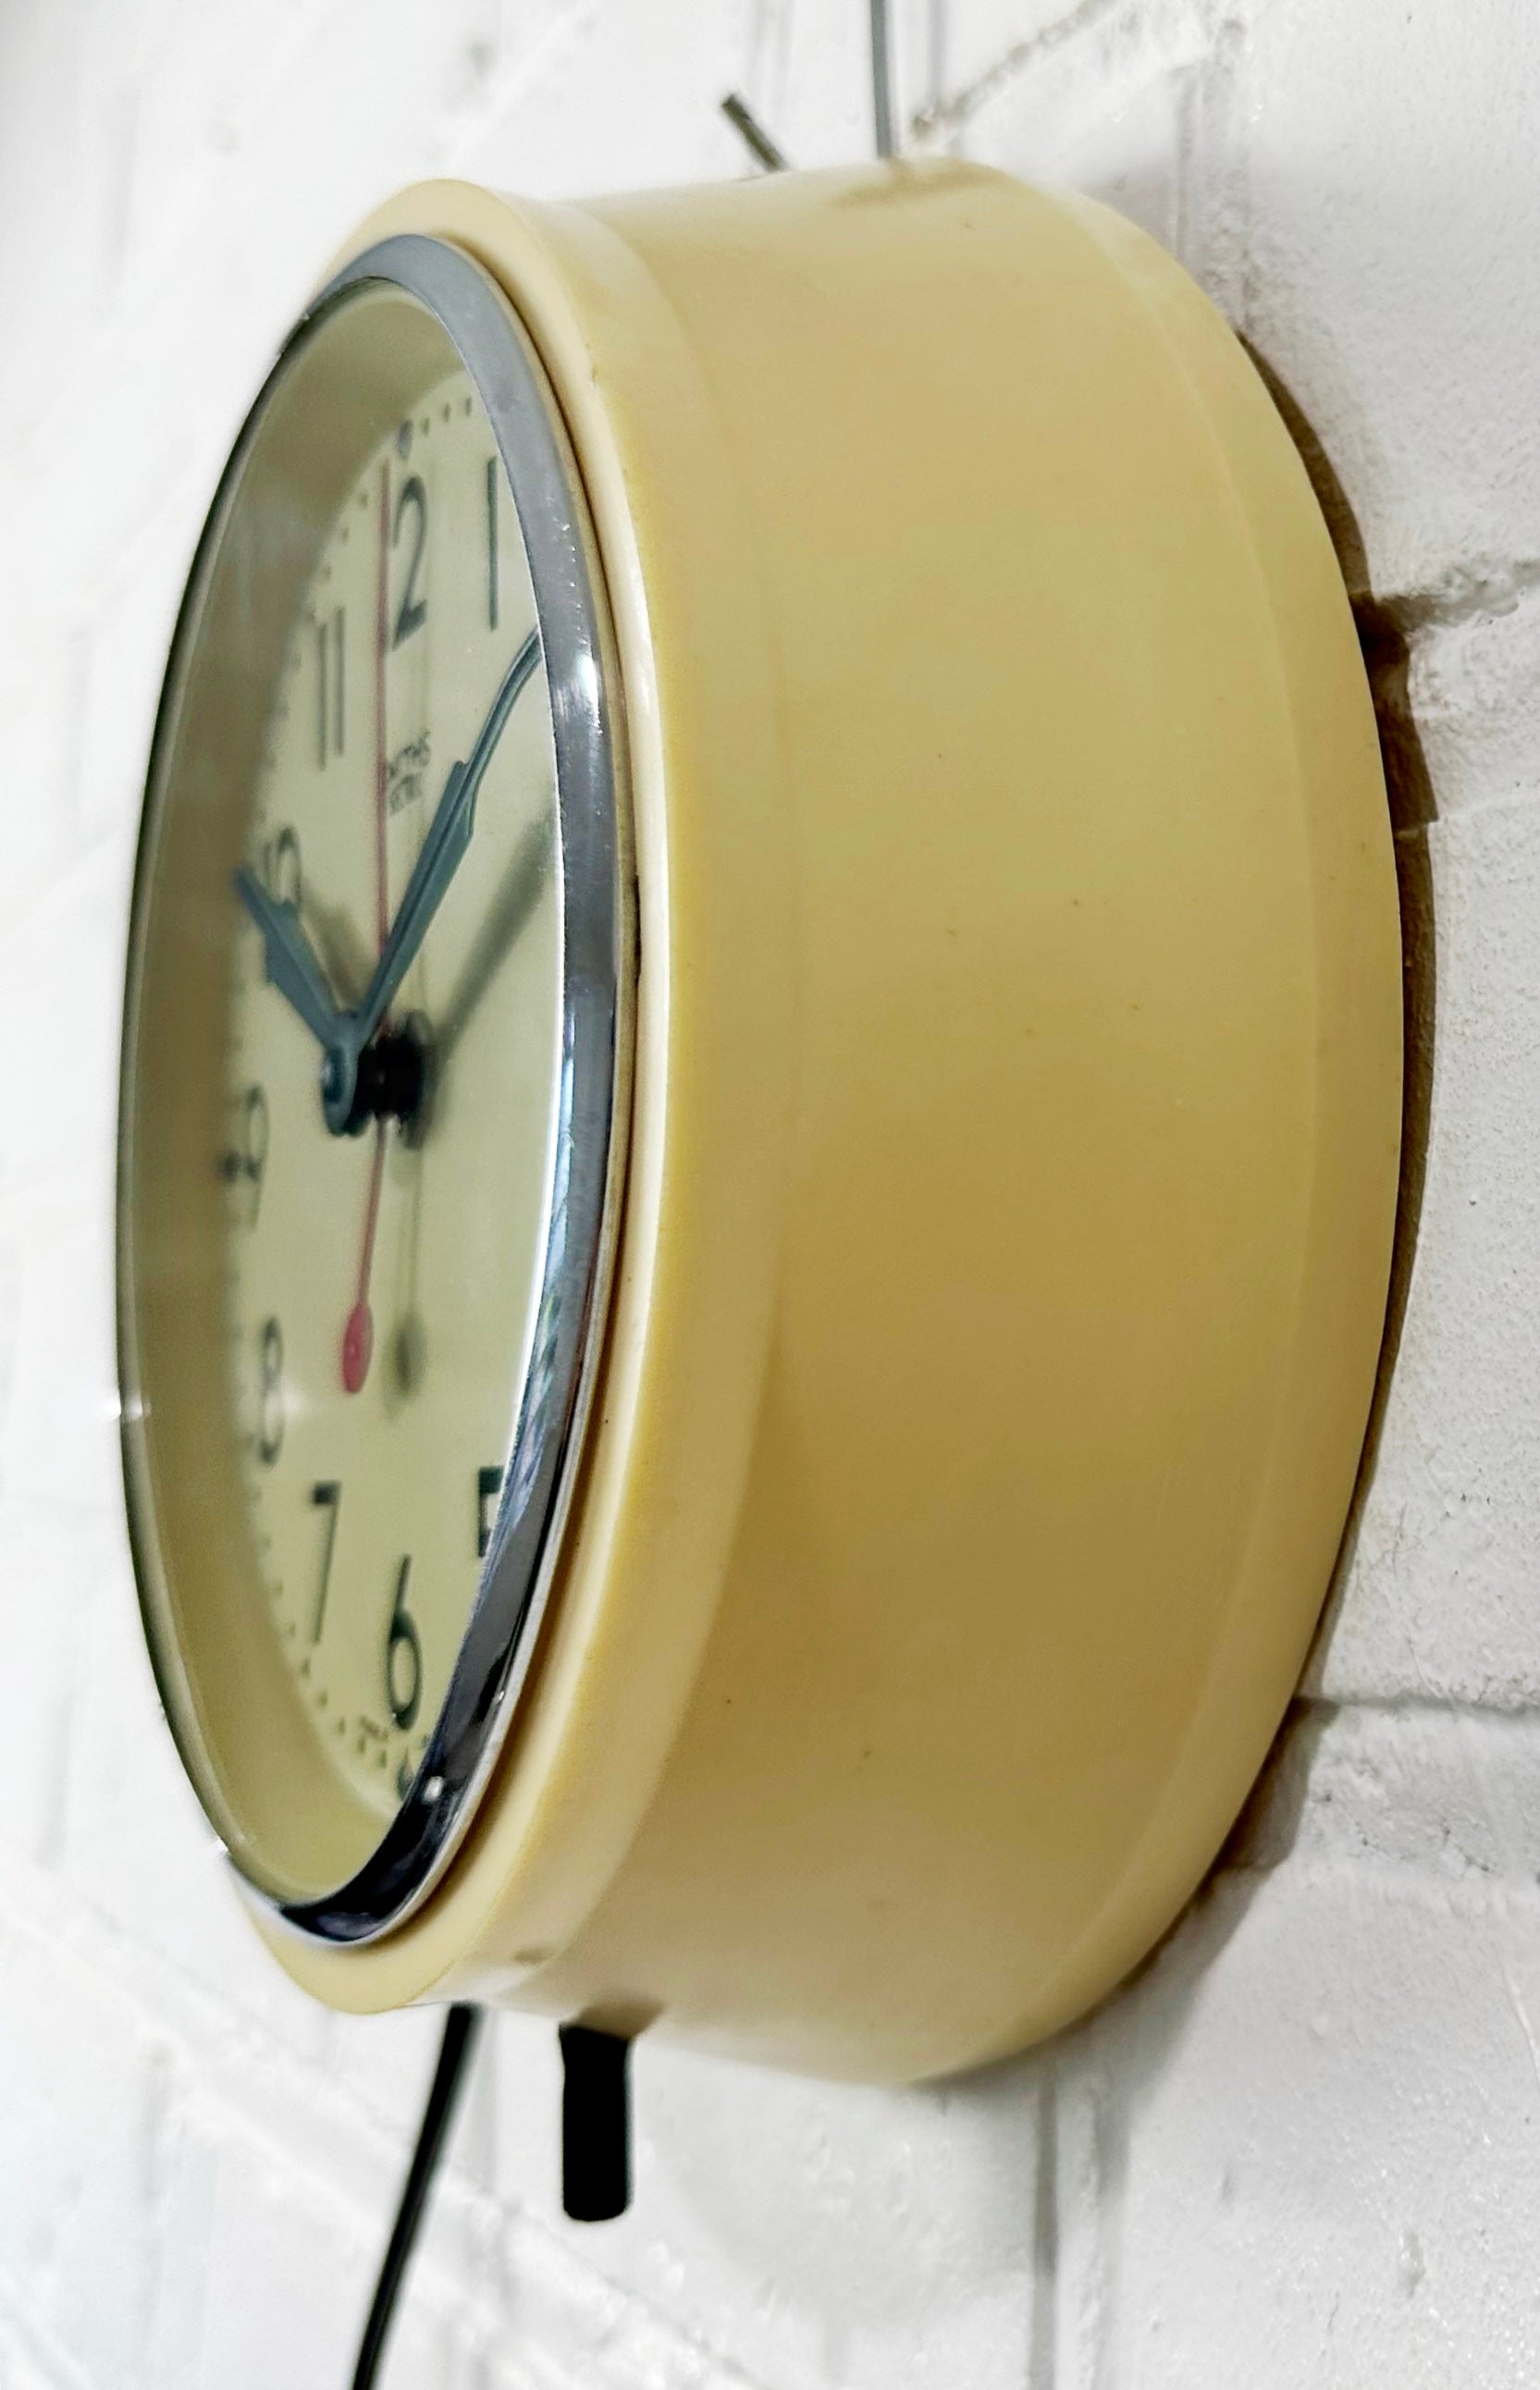 Vintage Smiths Sectric Electric Bakelite Wall Clock | Adelaide Clocks